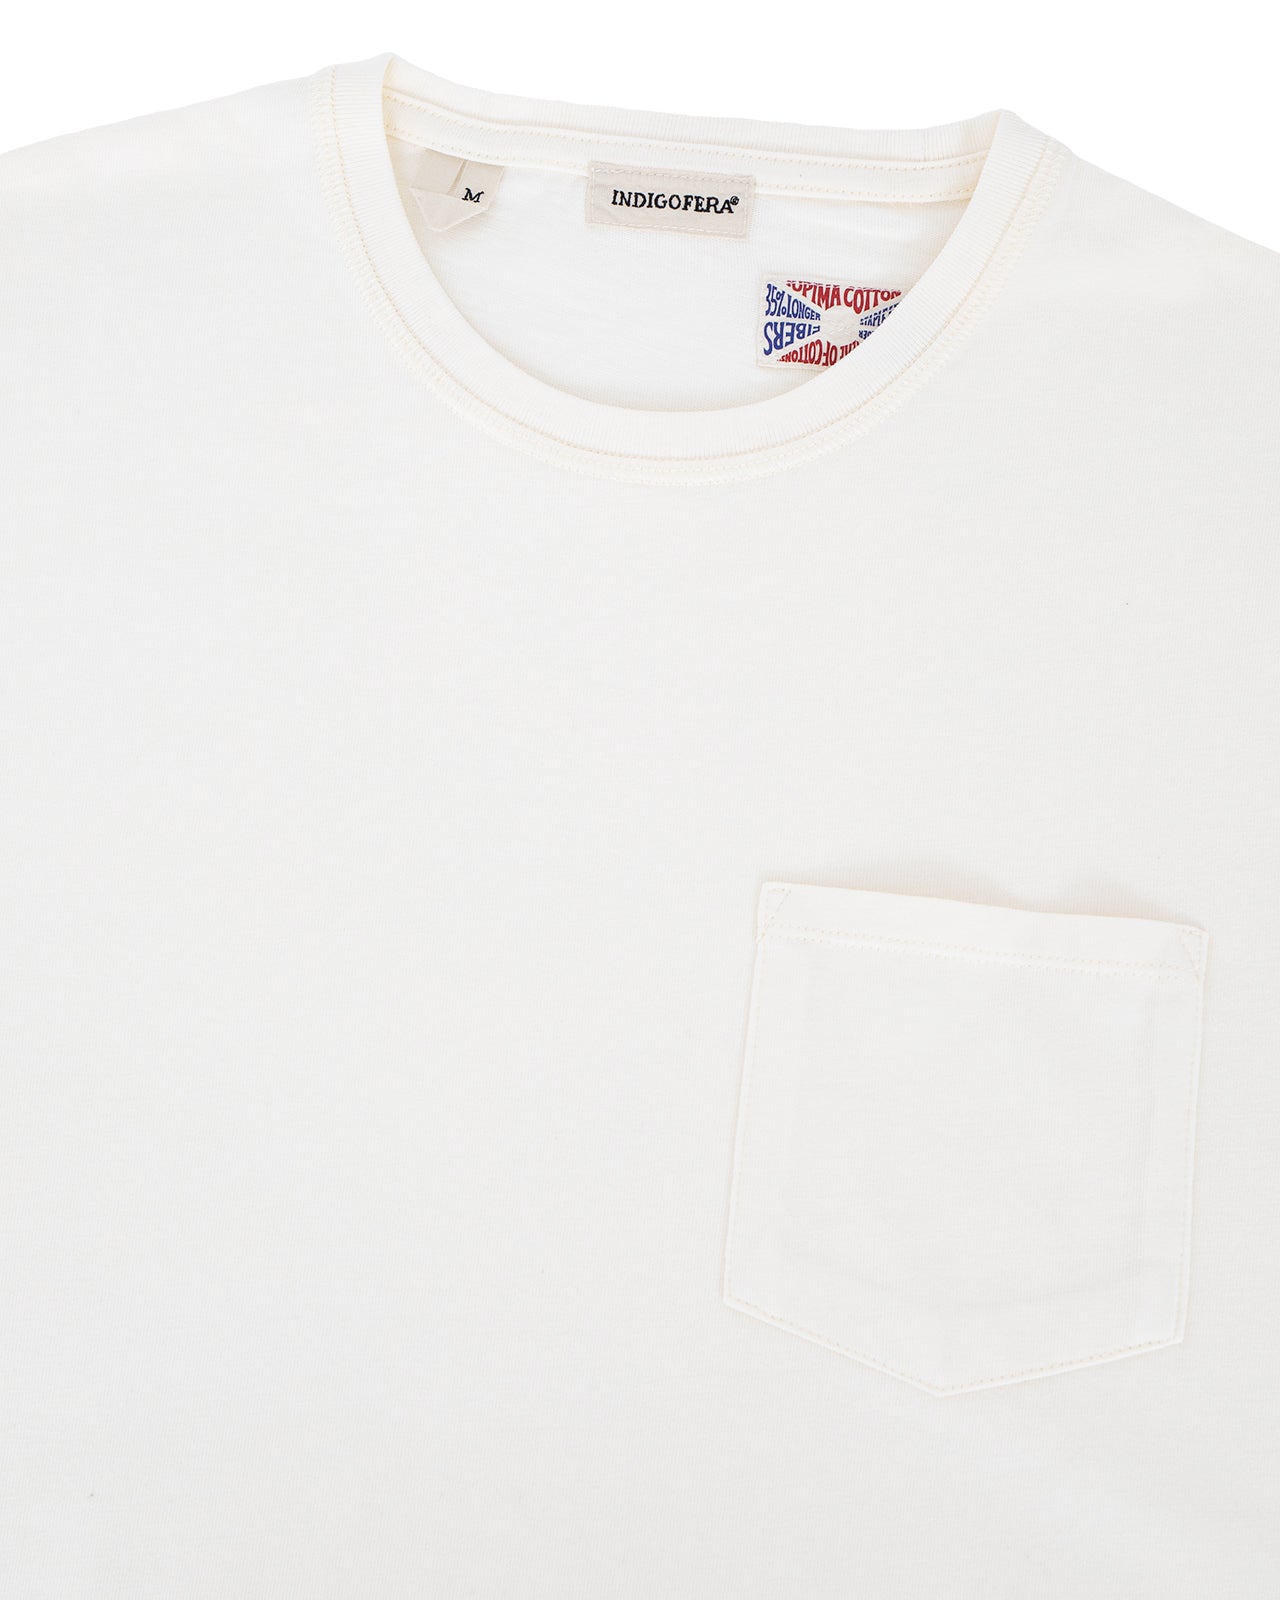 Indigofera Wilson T-Shirt, Cocatoo White